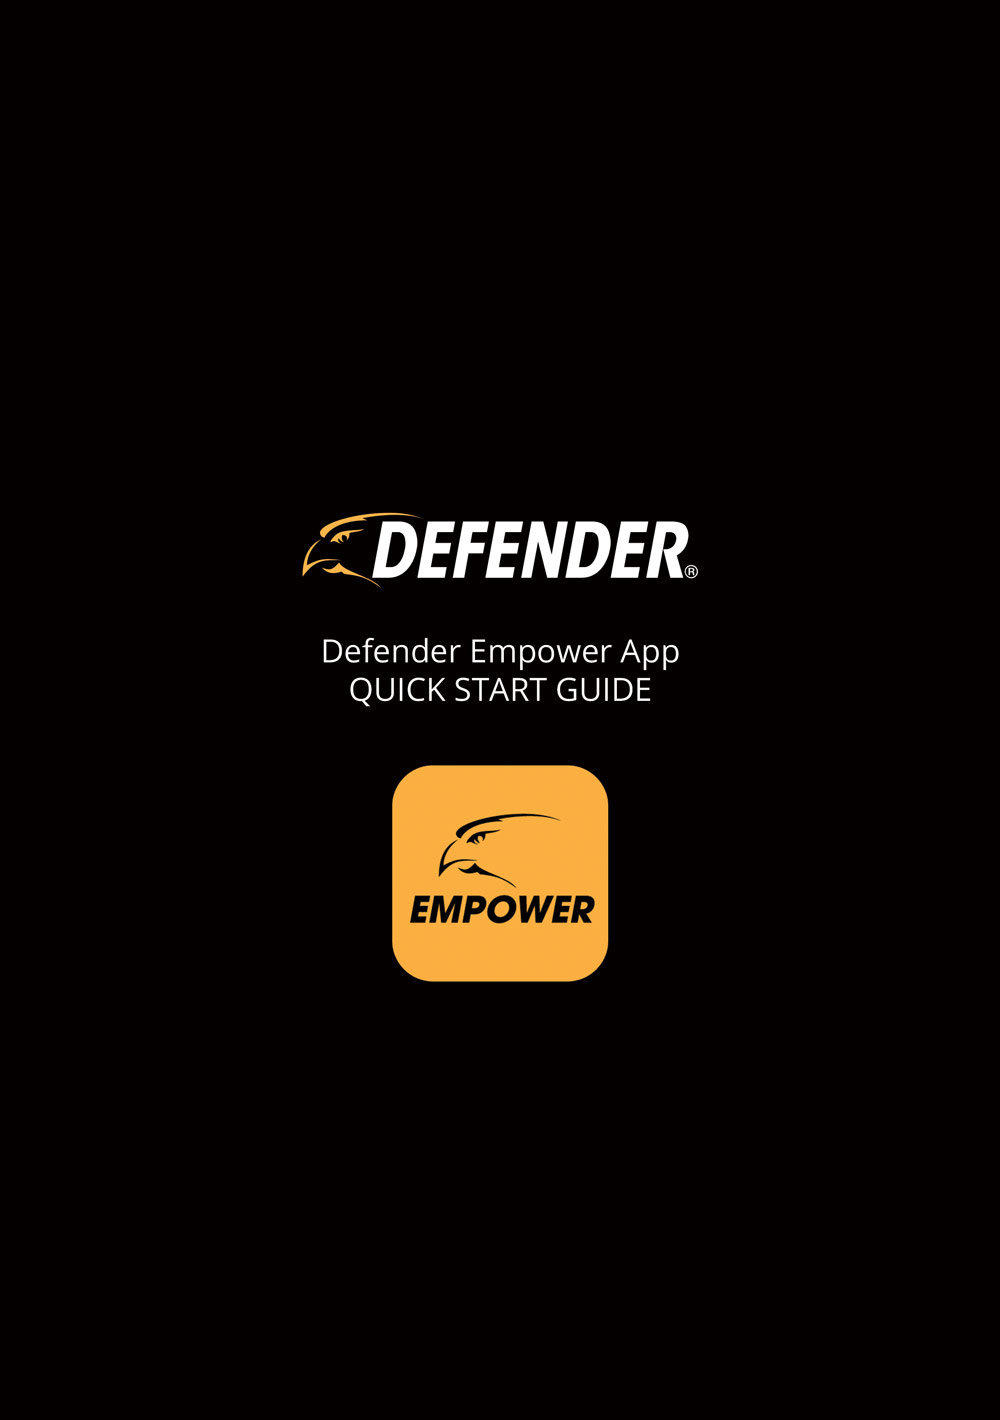 QSG-Defender-Empower-App_Cover.jpg